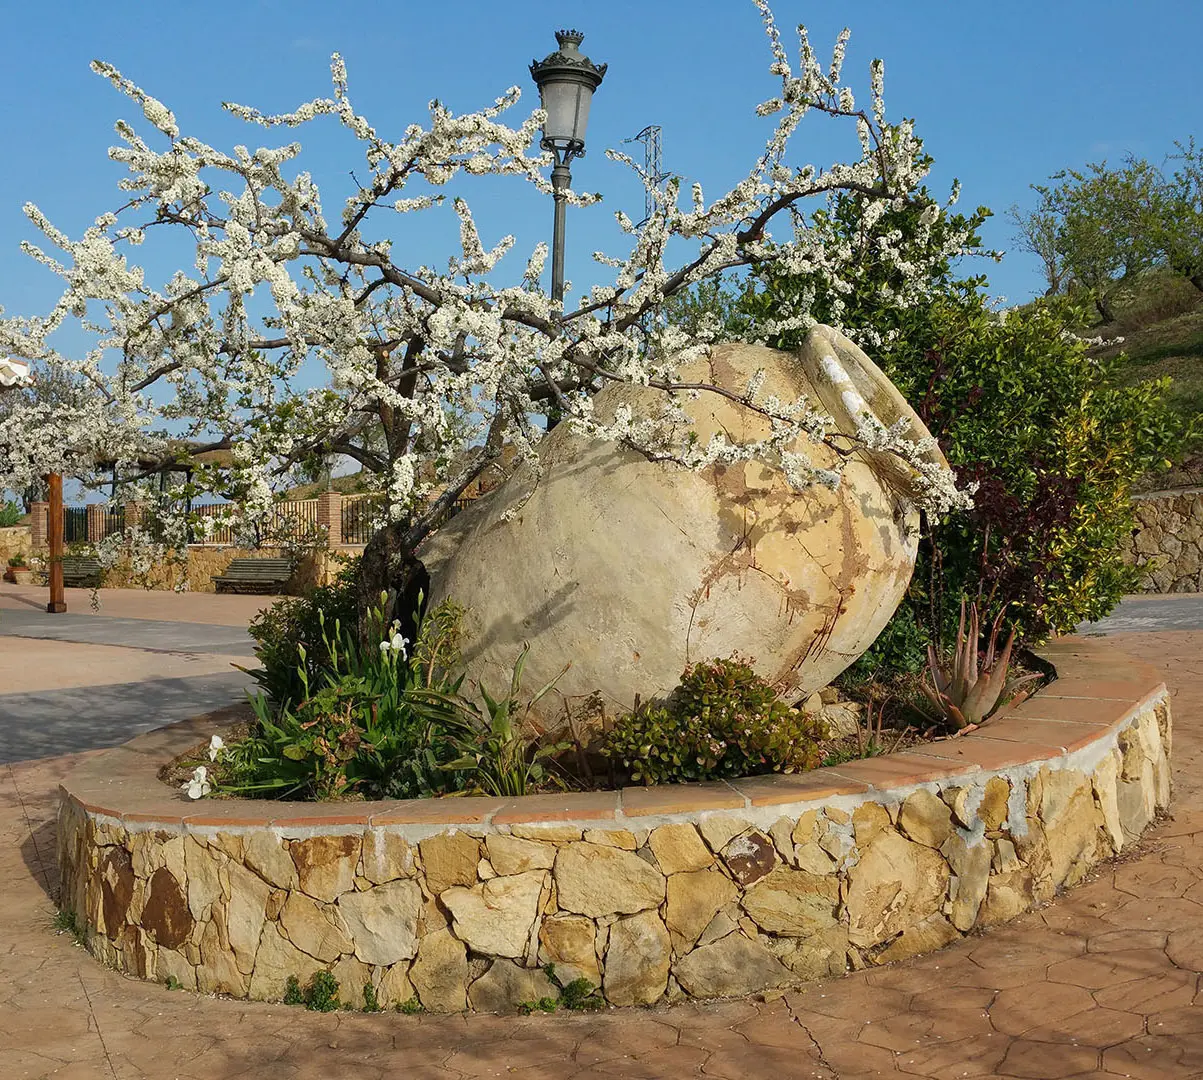 Una gran cantara de barro en una plazoleta acompañada de un almendro en flor.